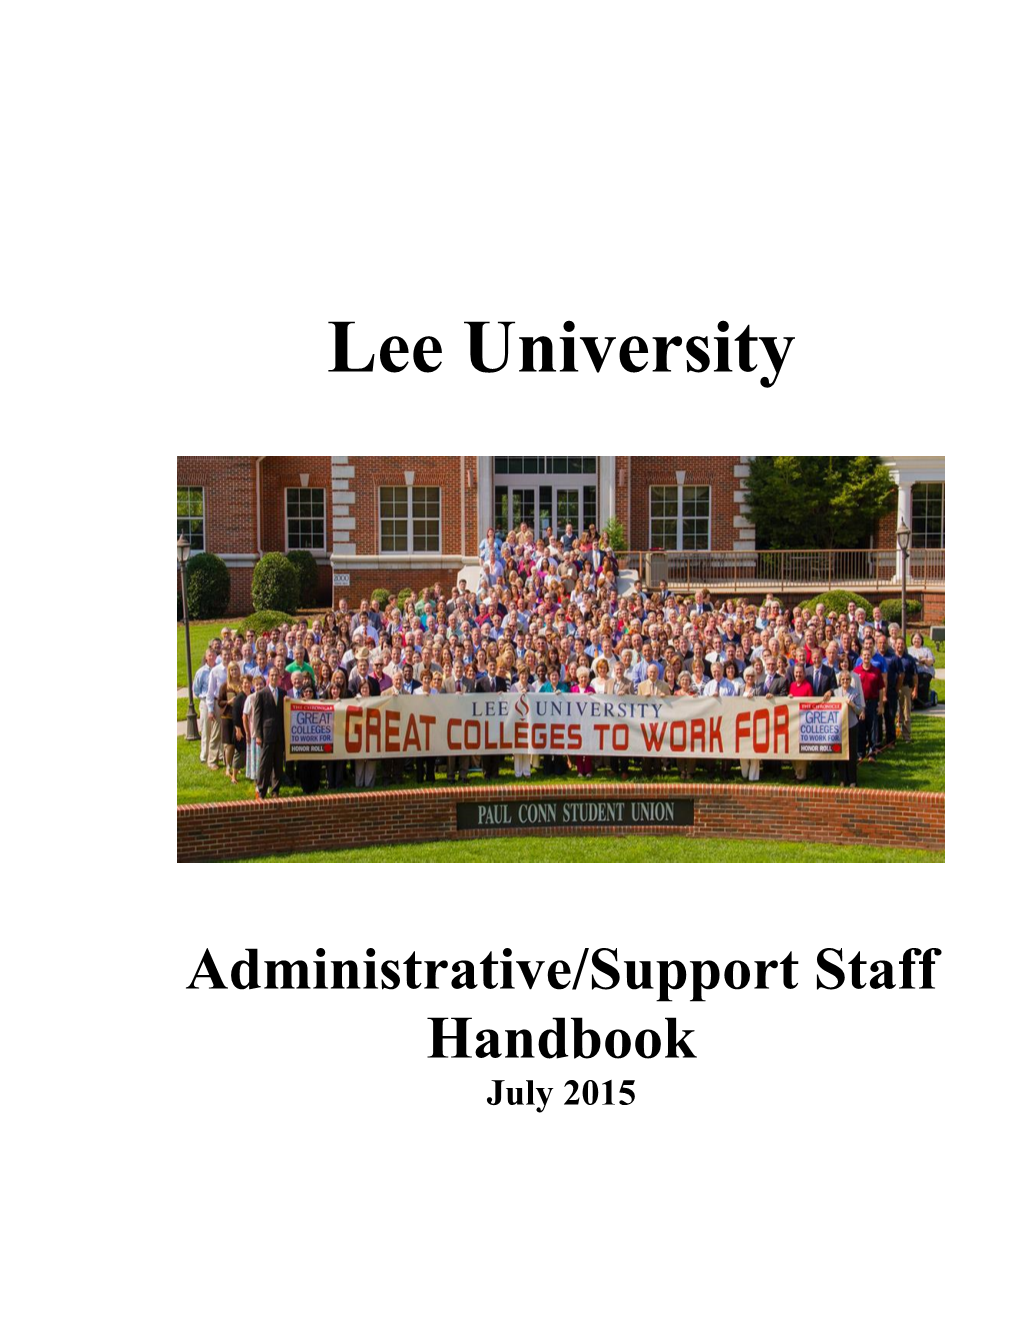 Lee University Administrative/Support Staff Handbook